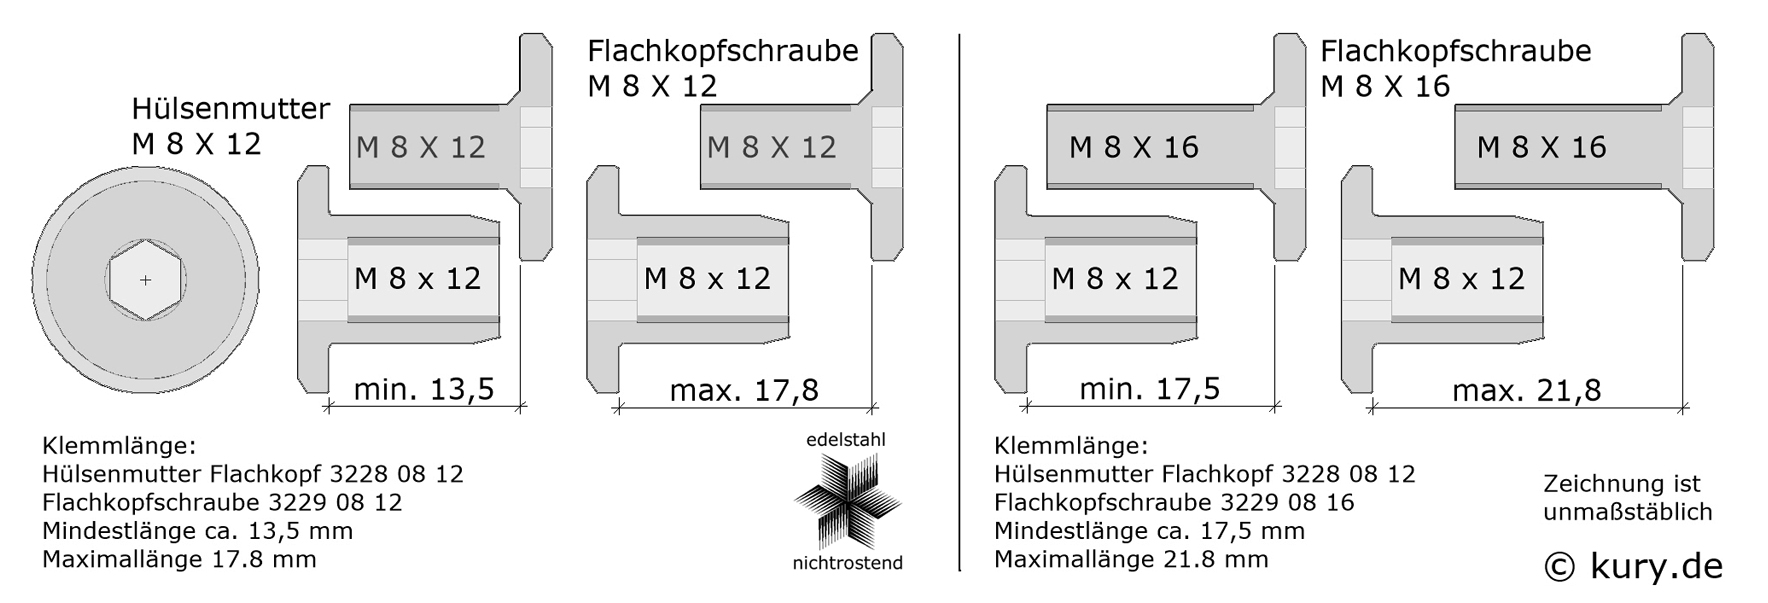 Flachkopfschraube M 4x10 als Sonderanfertigung Edelstahl 1.4305